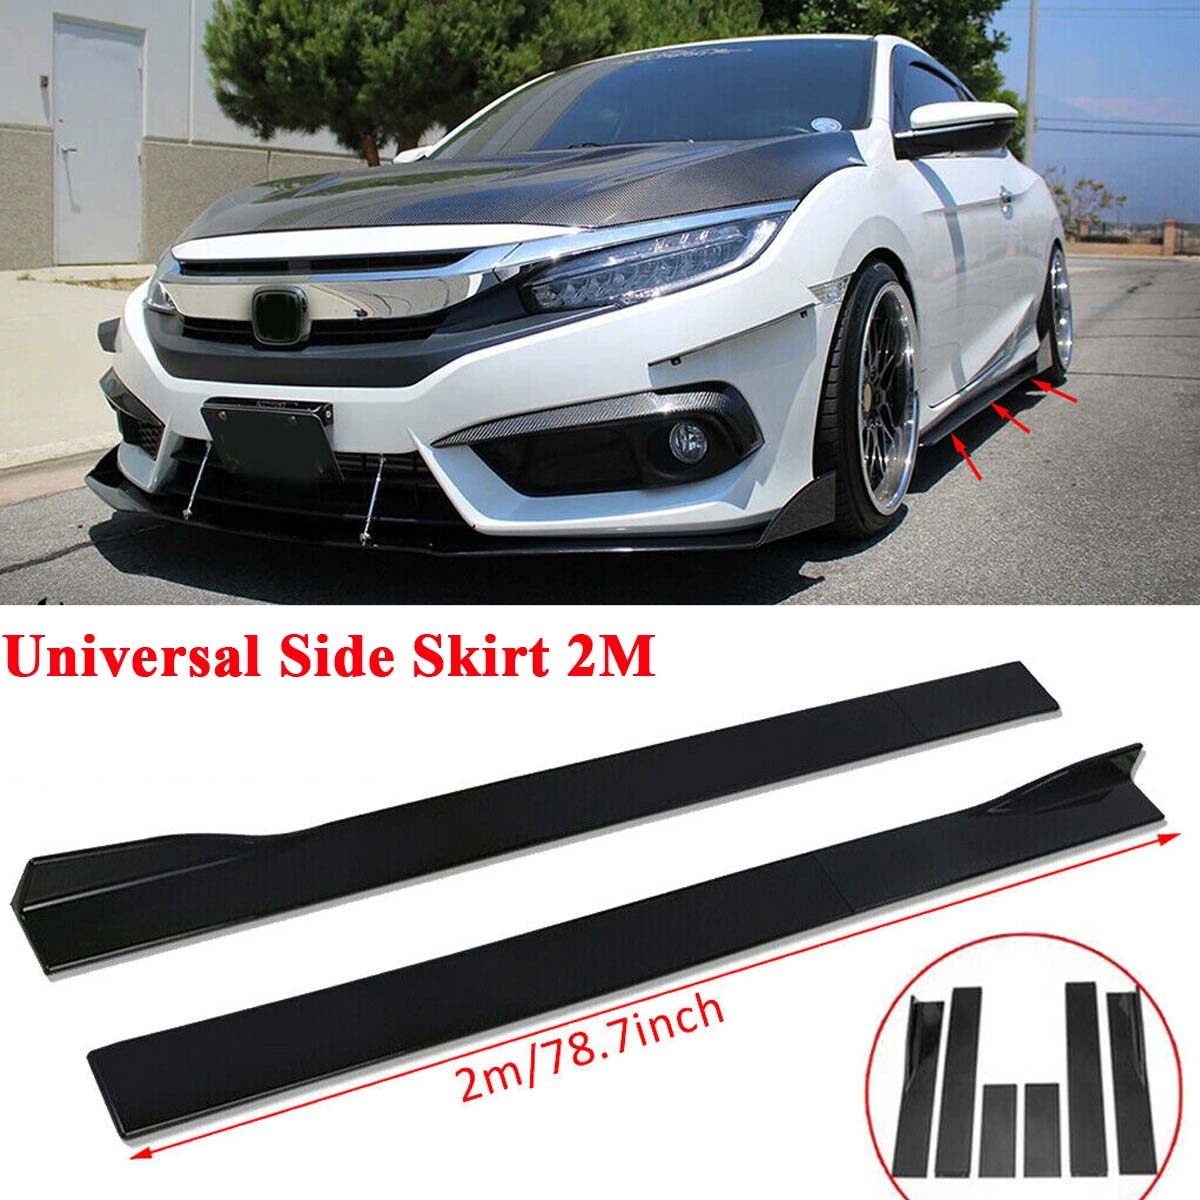 2M Side Skirt Universal For Honda Civic Si Coupe Sedan 2000-2022 Extension Splitters Apron Lip Splitter Winglet Car Accessories